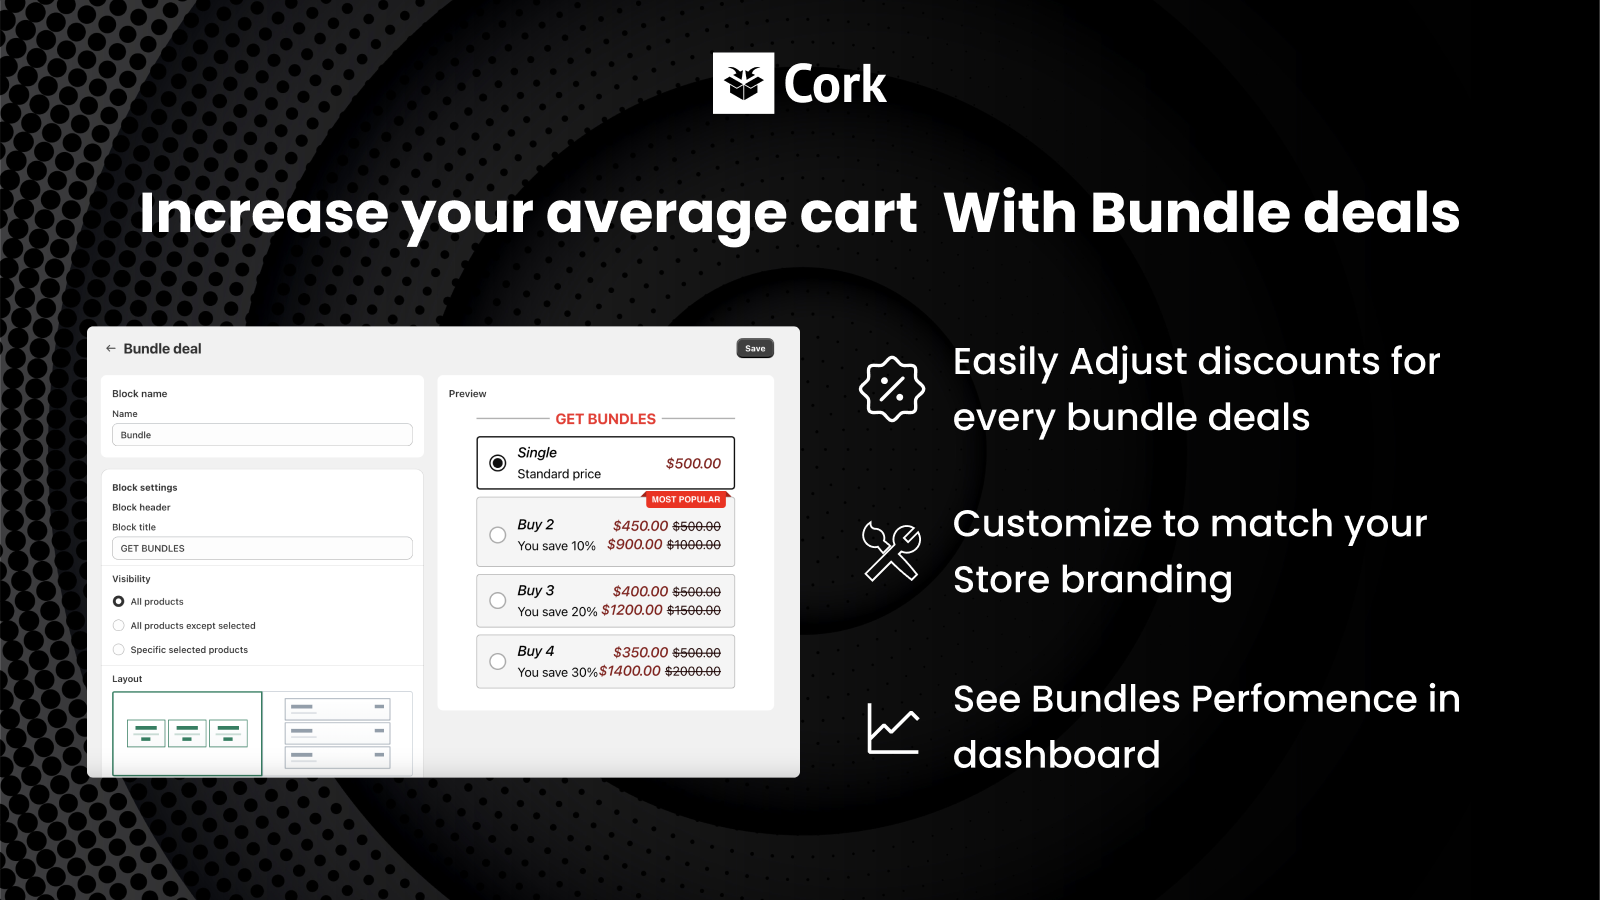  Cork - Produkt paket app